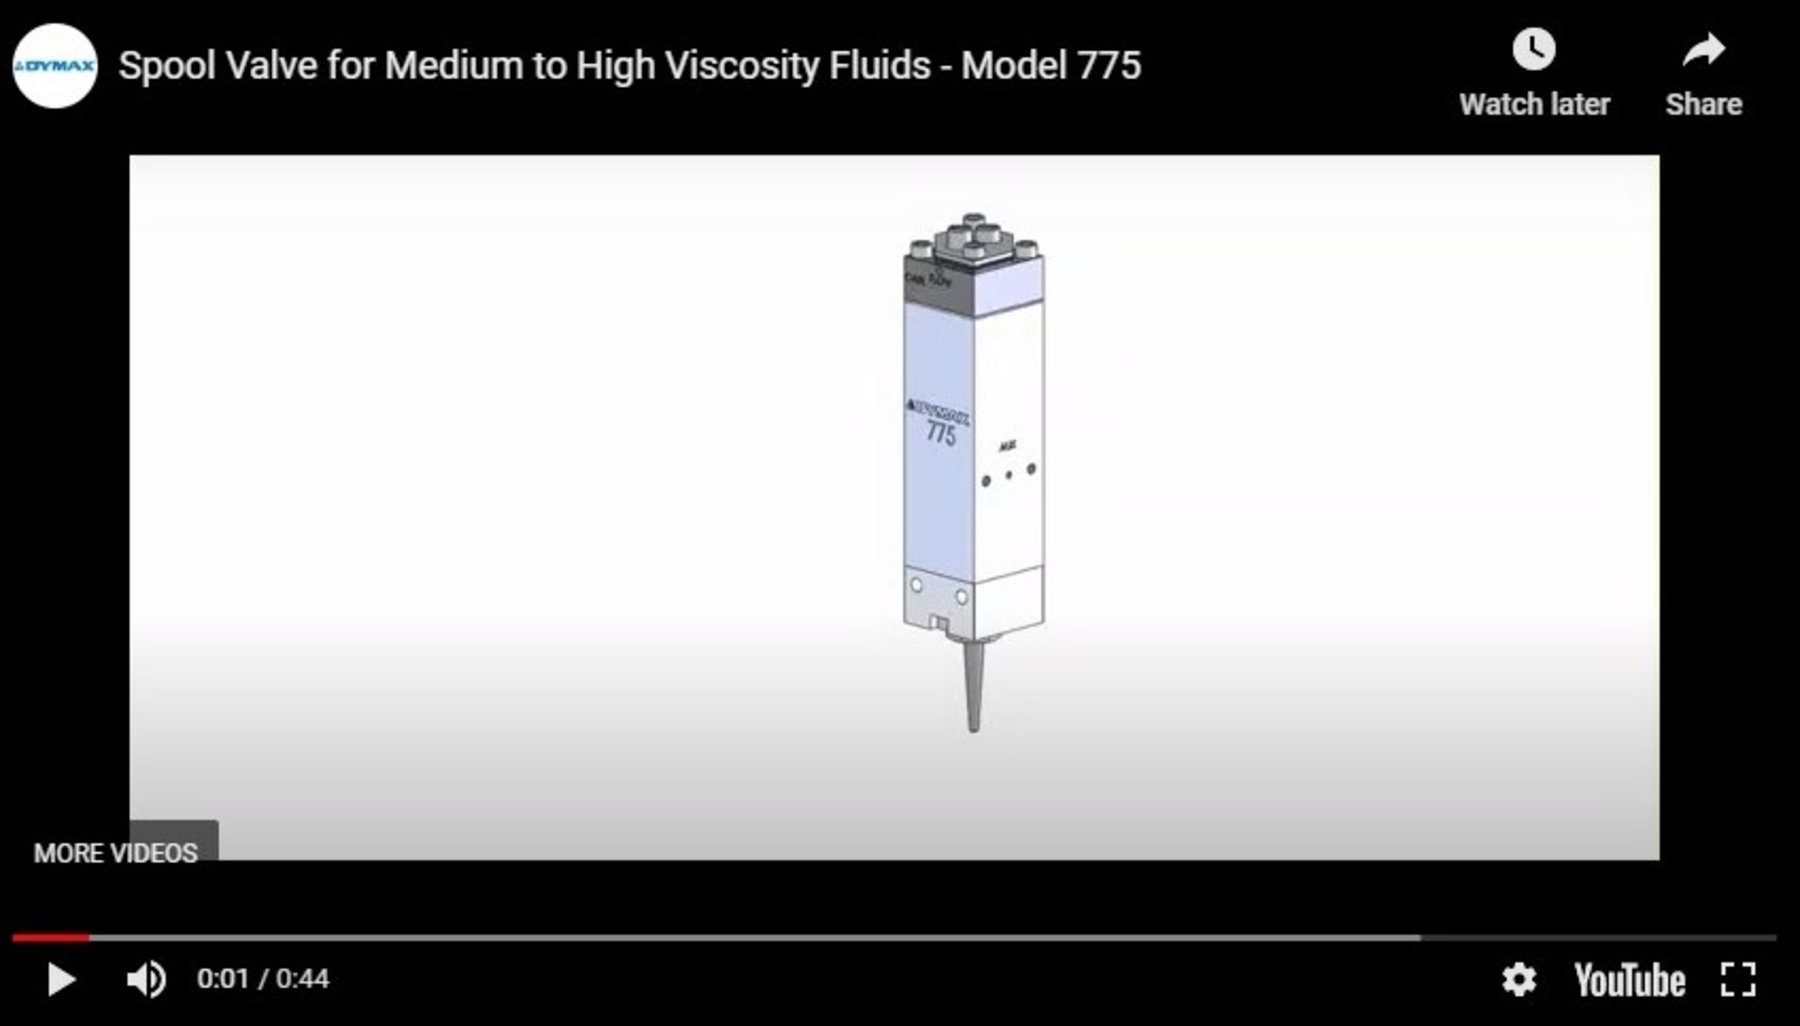 Model 775 Spool Valve for Medium to High Viscosity Fluids